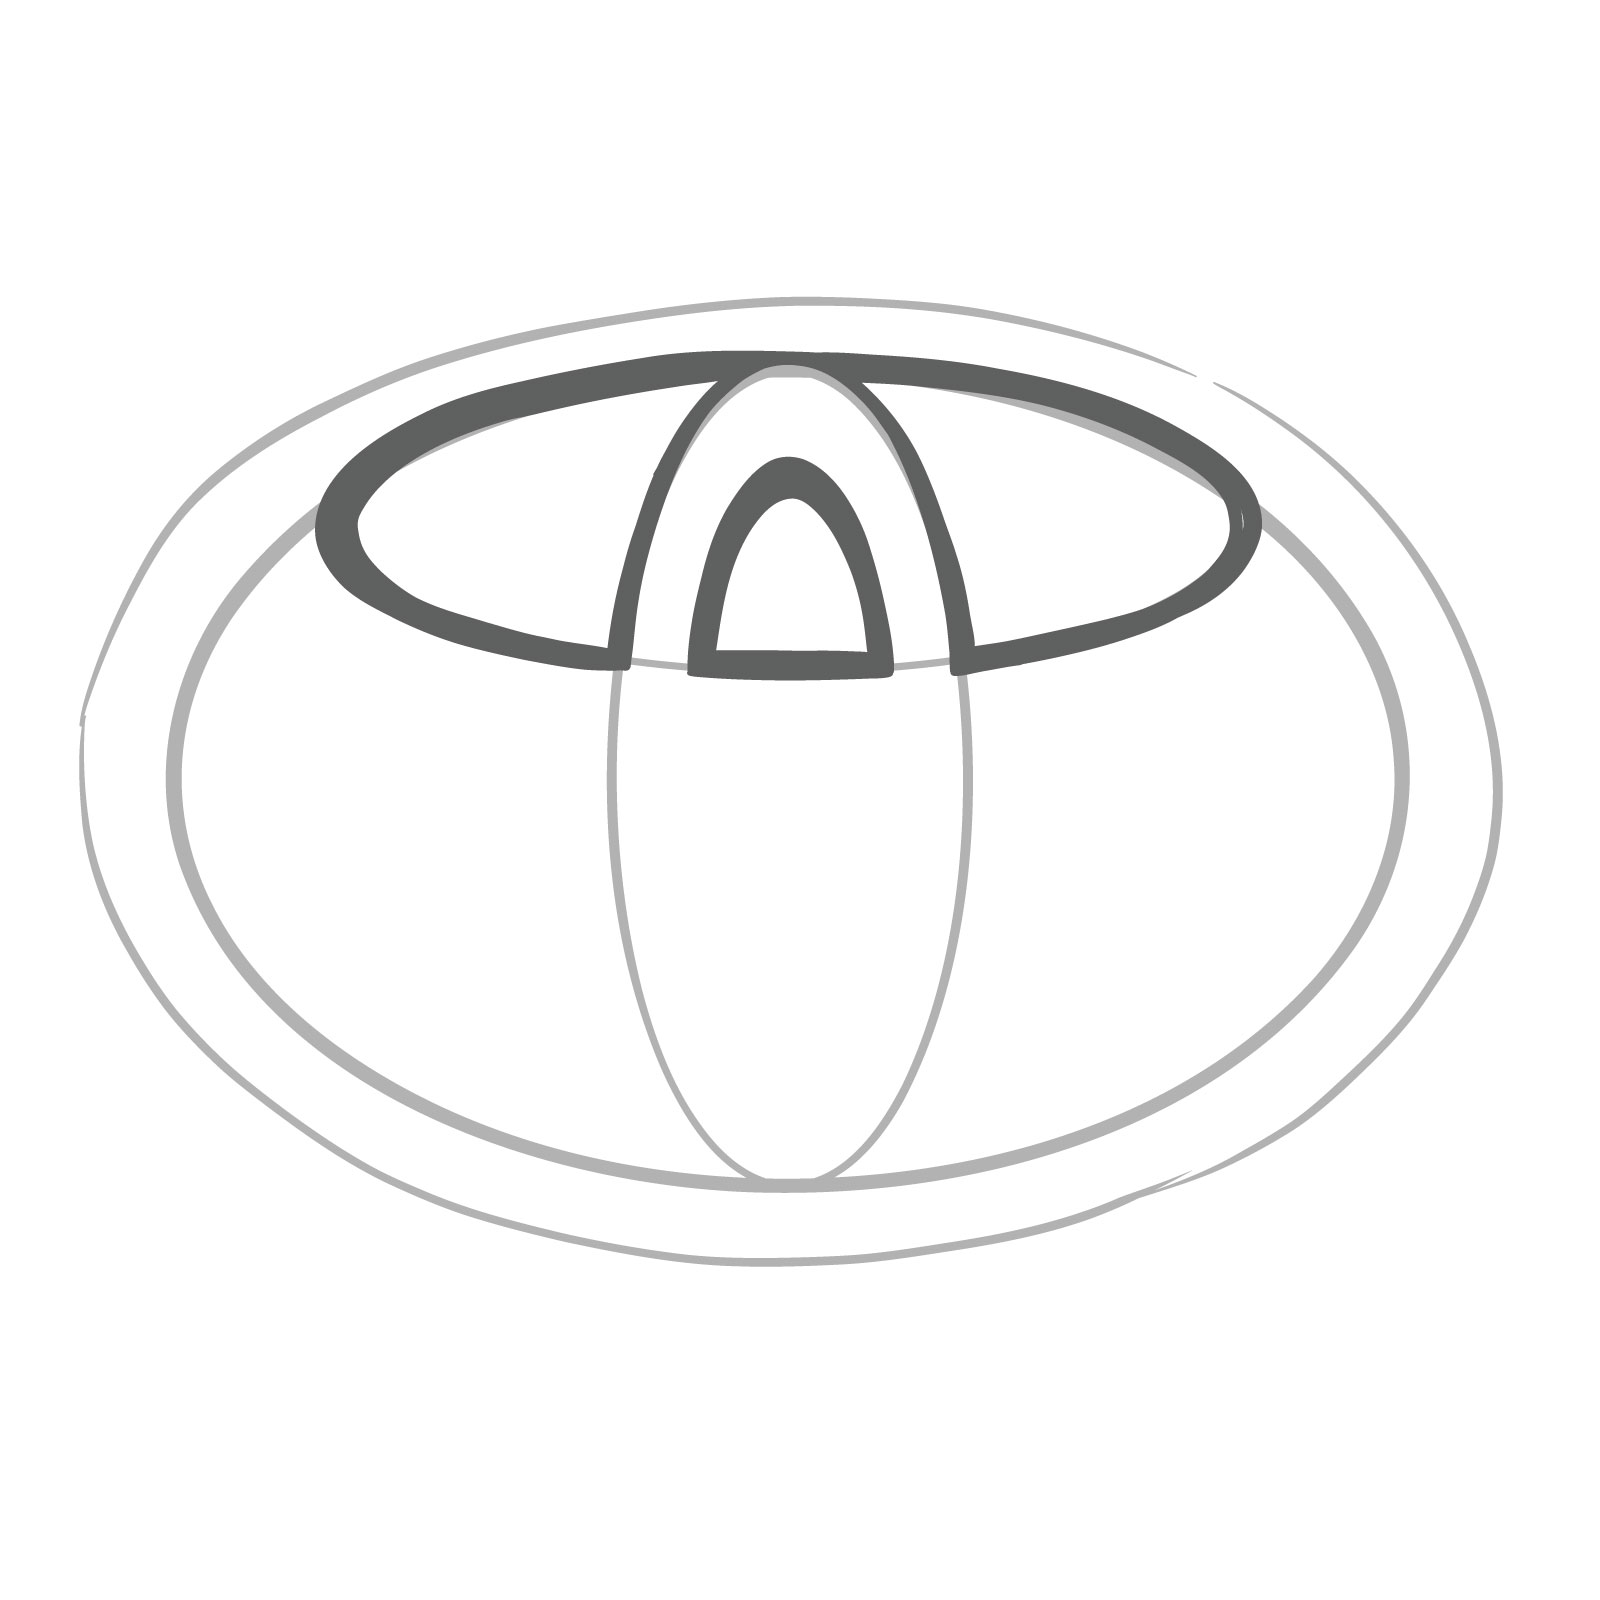 How to draw a Toyota logo - step 06